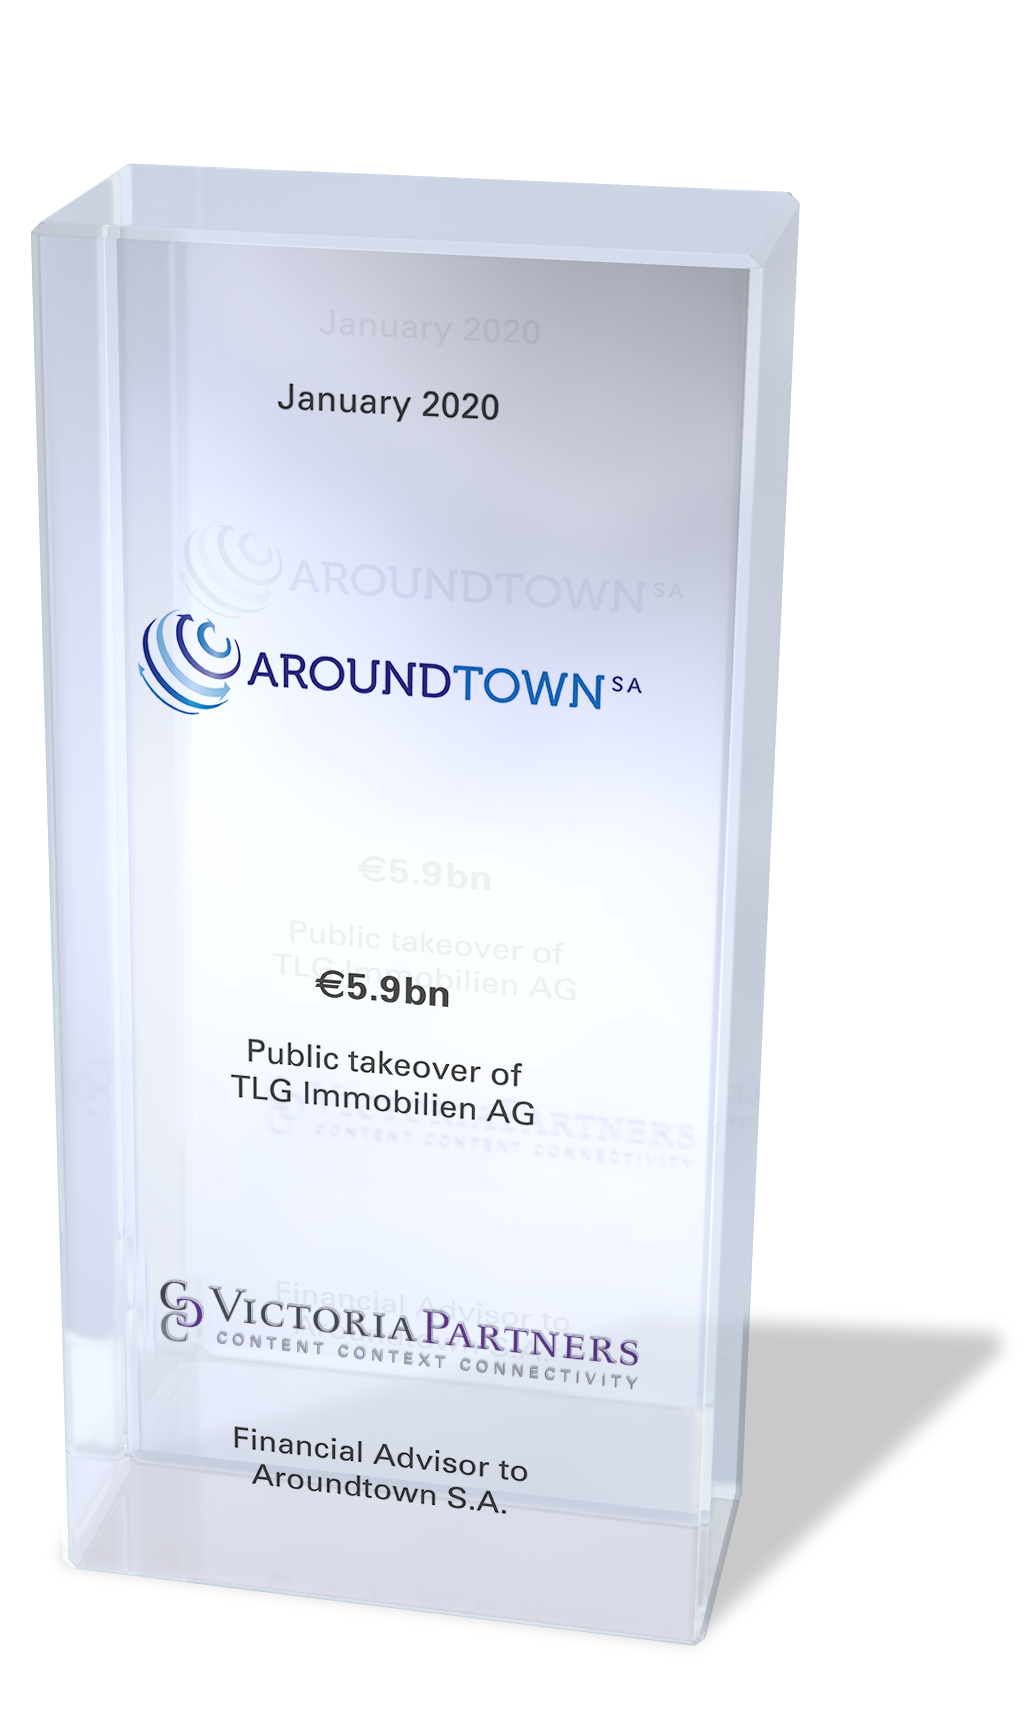 VICTORIAPARTNERS - Financial Advisor to Aroundtown S.A. - January 2020